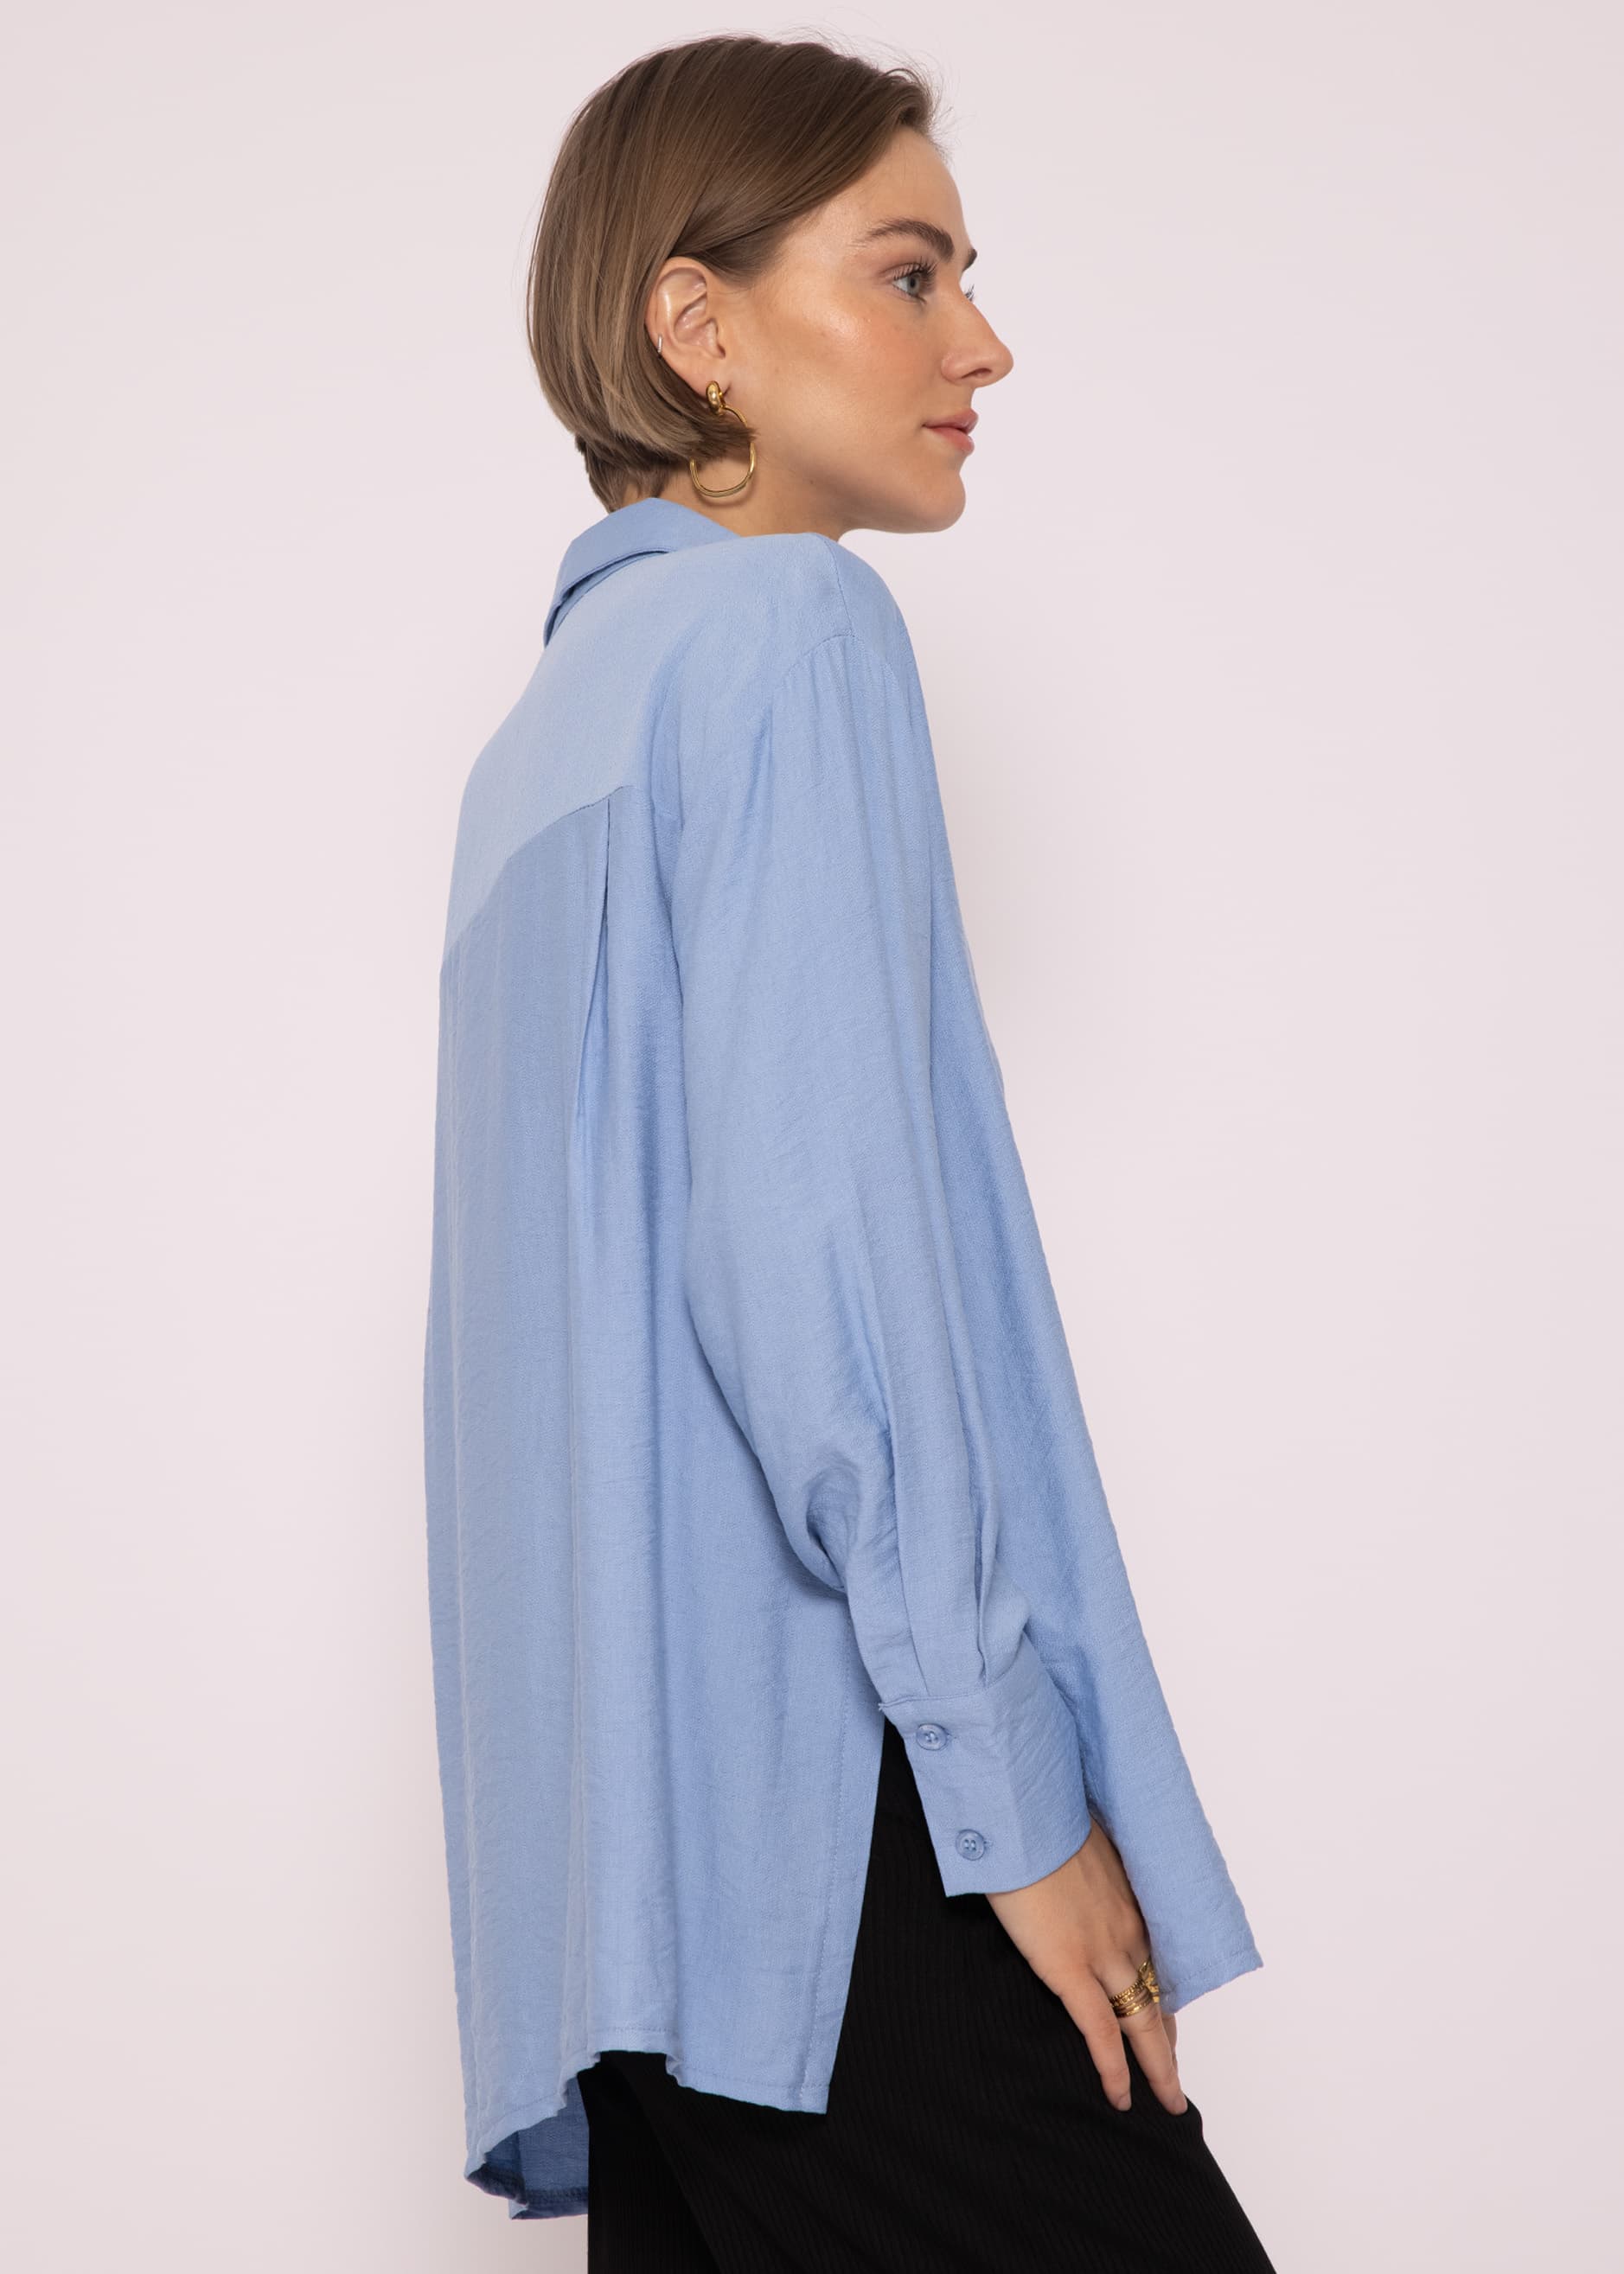 viscose blouse with slits, light blue Blouses | Clothing | SassyClassy.com